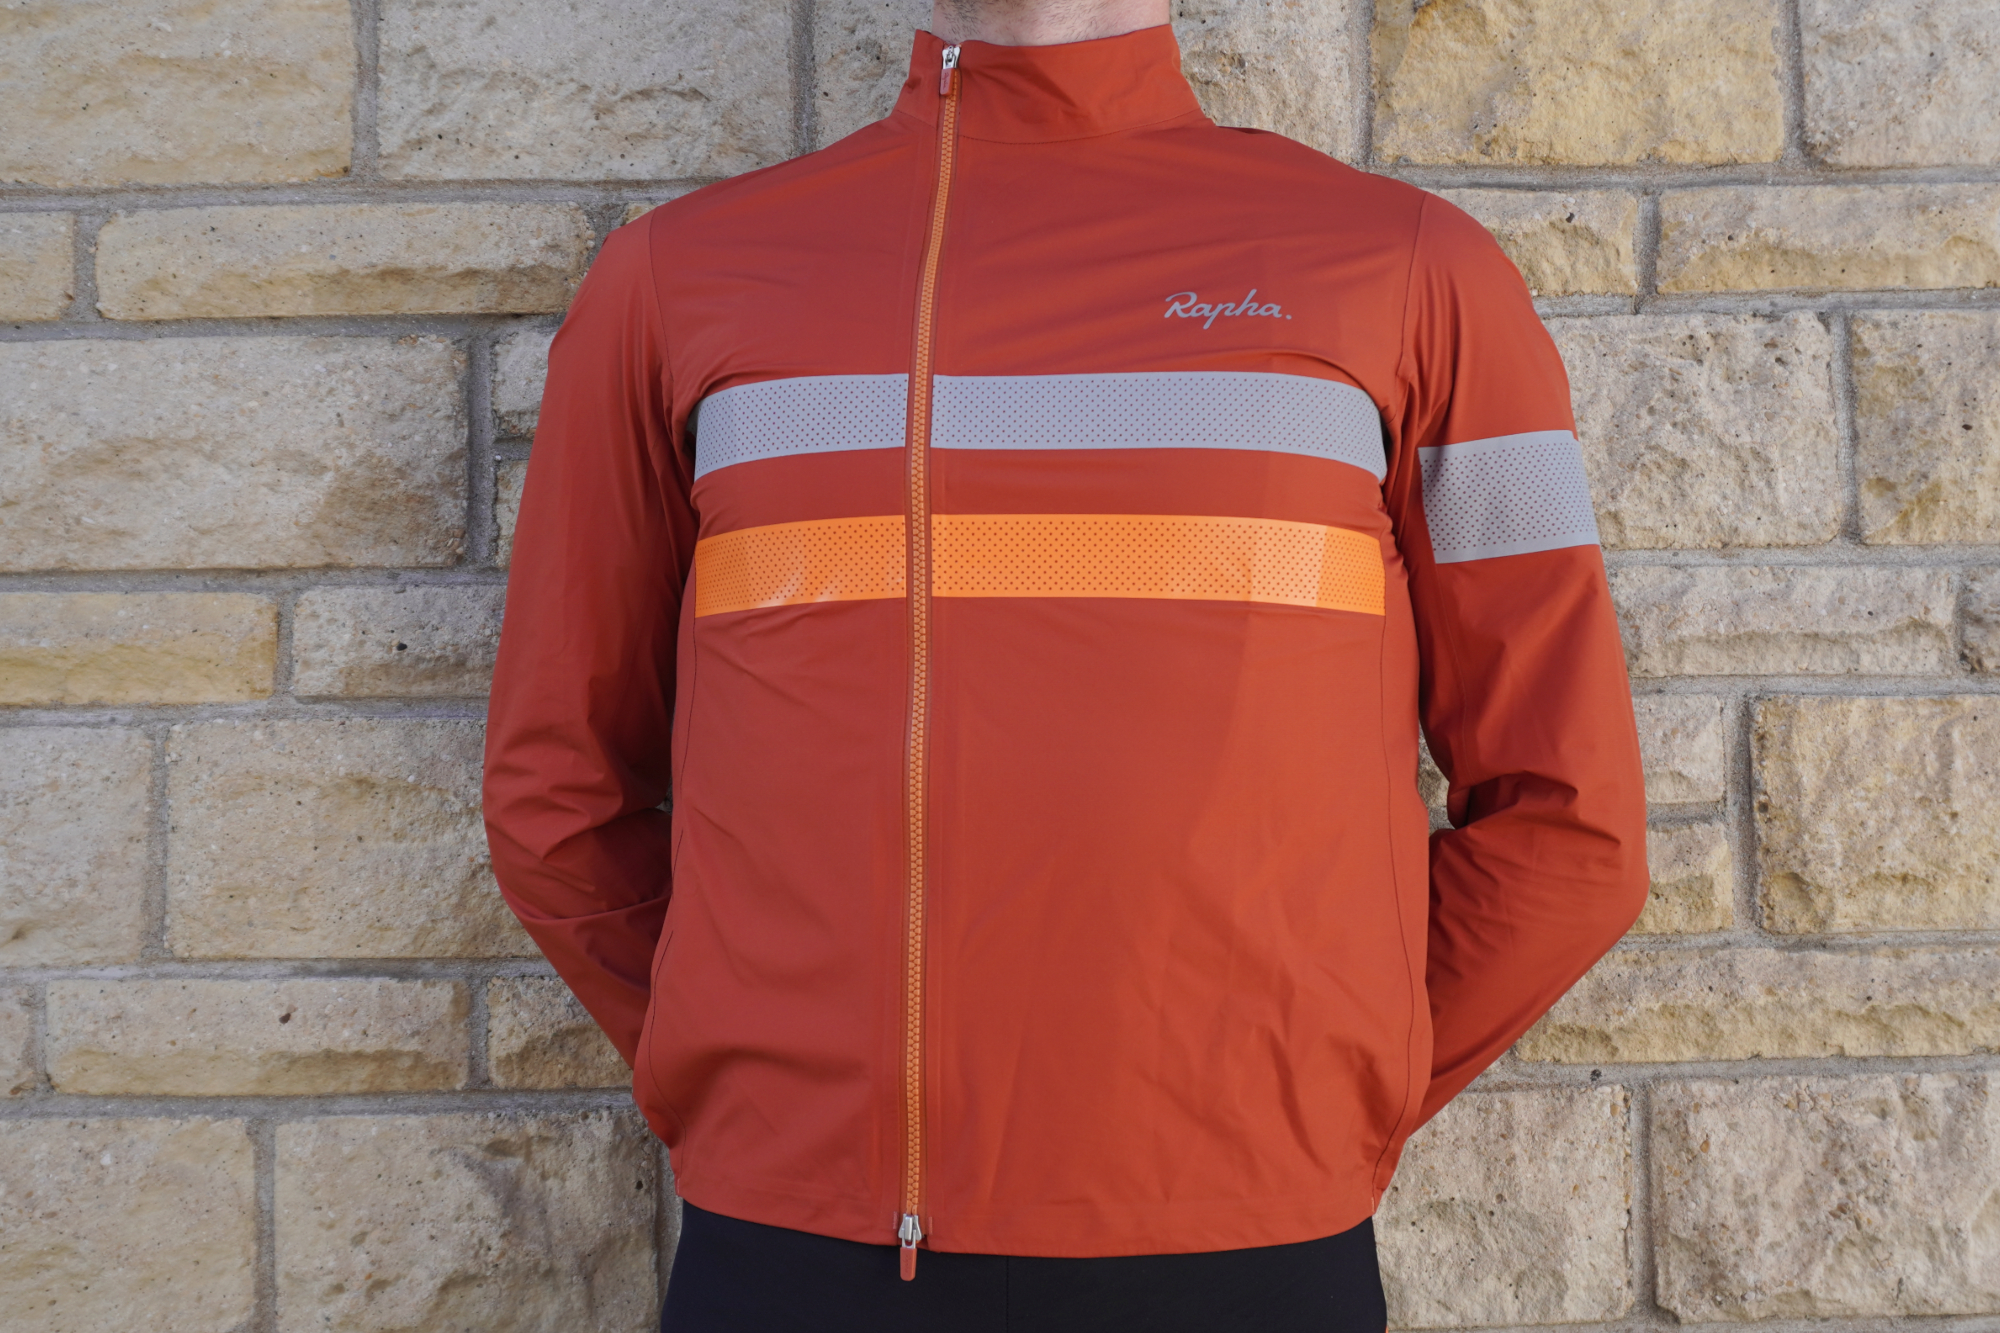 Rapha Brevet Gore-Tex Rain Jacket worn by cyclist standing against a wall